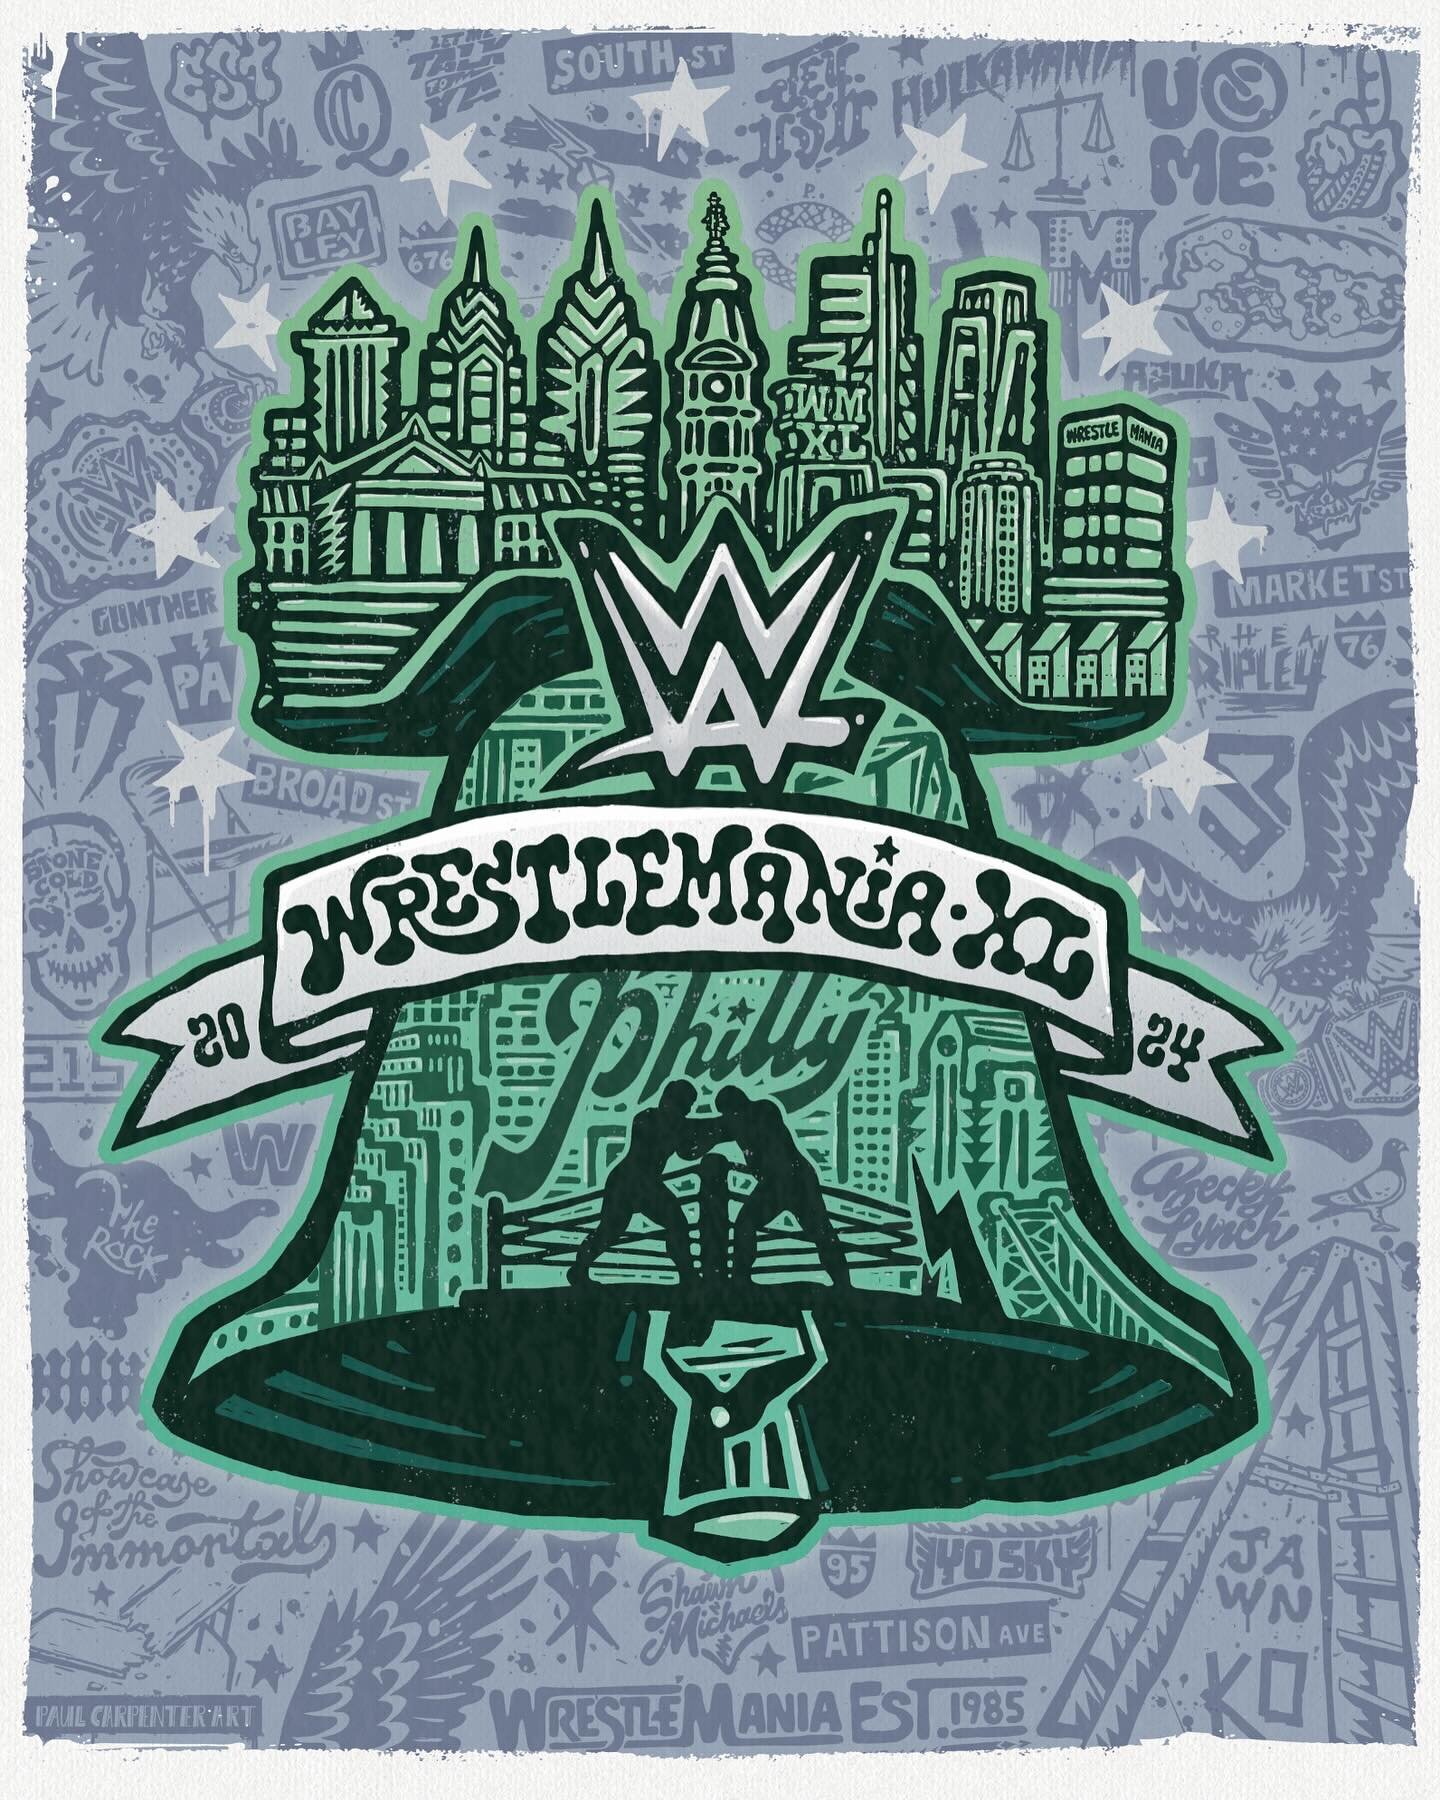 🔥 &ldquo;WWE WrestleMania 40 Unsigned Fanatics Authentic 16&rdquo; x 20&rdquo; Paul Carpenter Liberty Bell Art Print&rdquo; 🔥 
AVAILABLE NOW AT FANATICS AND WWE STORE ONLINE (link in bio) 🔔 
@wwe @fanatics 
.
.
.
#paulcarpenterart #wwe #fanatics #